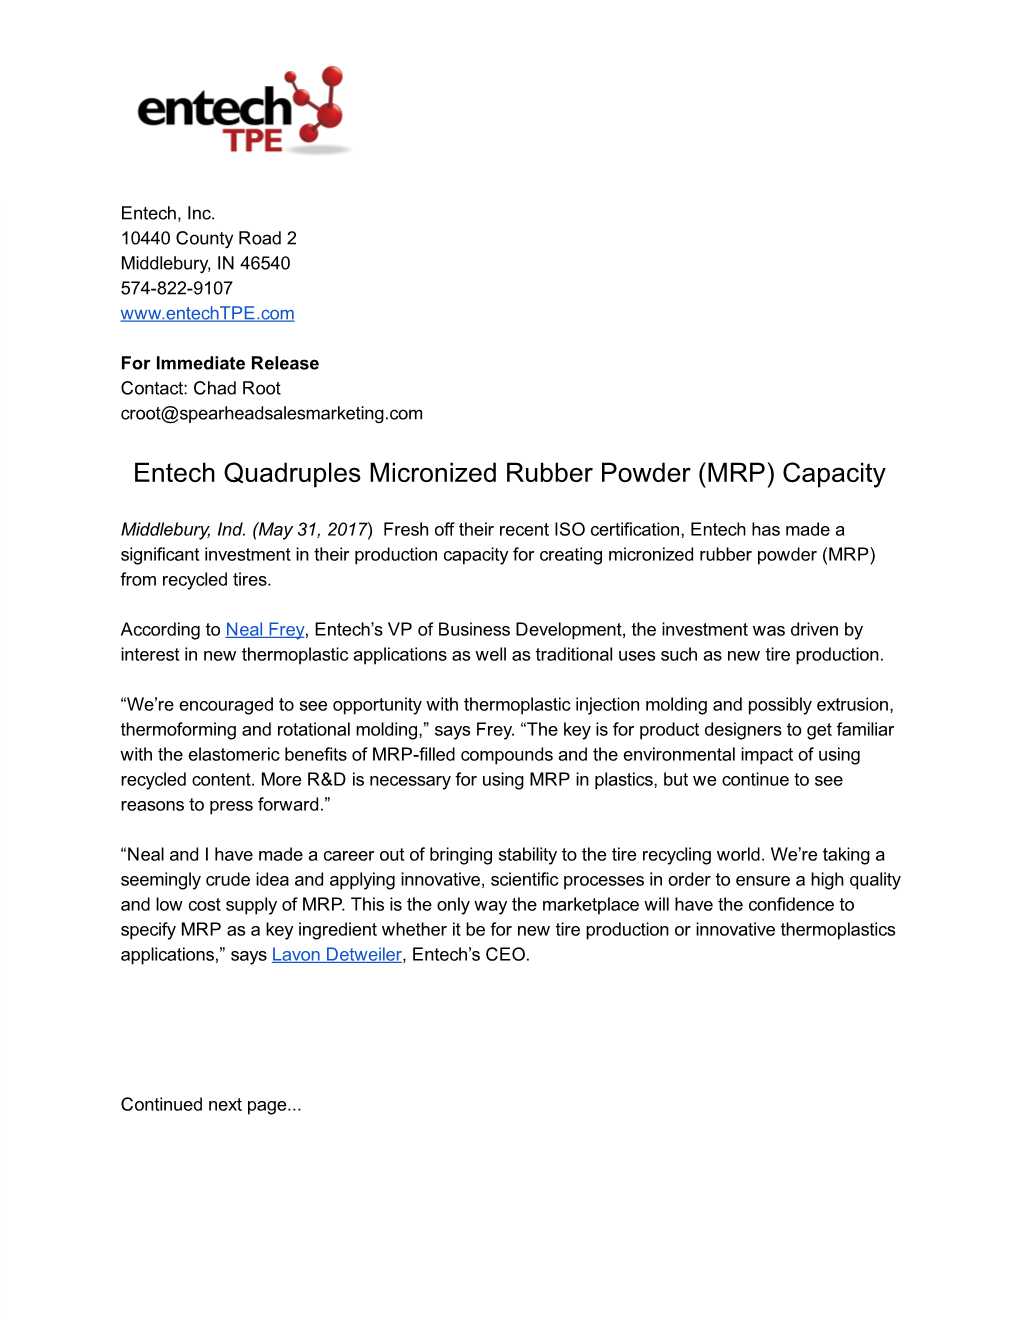 Entech Quadruples Micronized Rubber Powder (MRP) Capacity